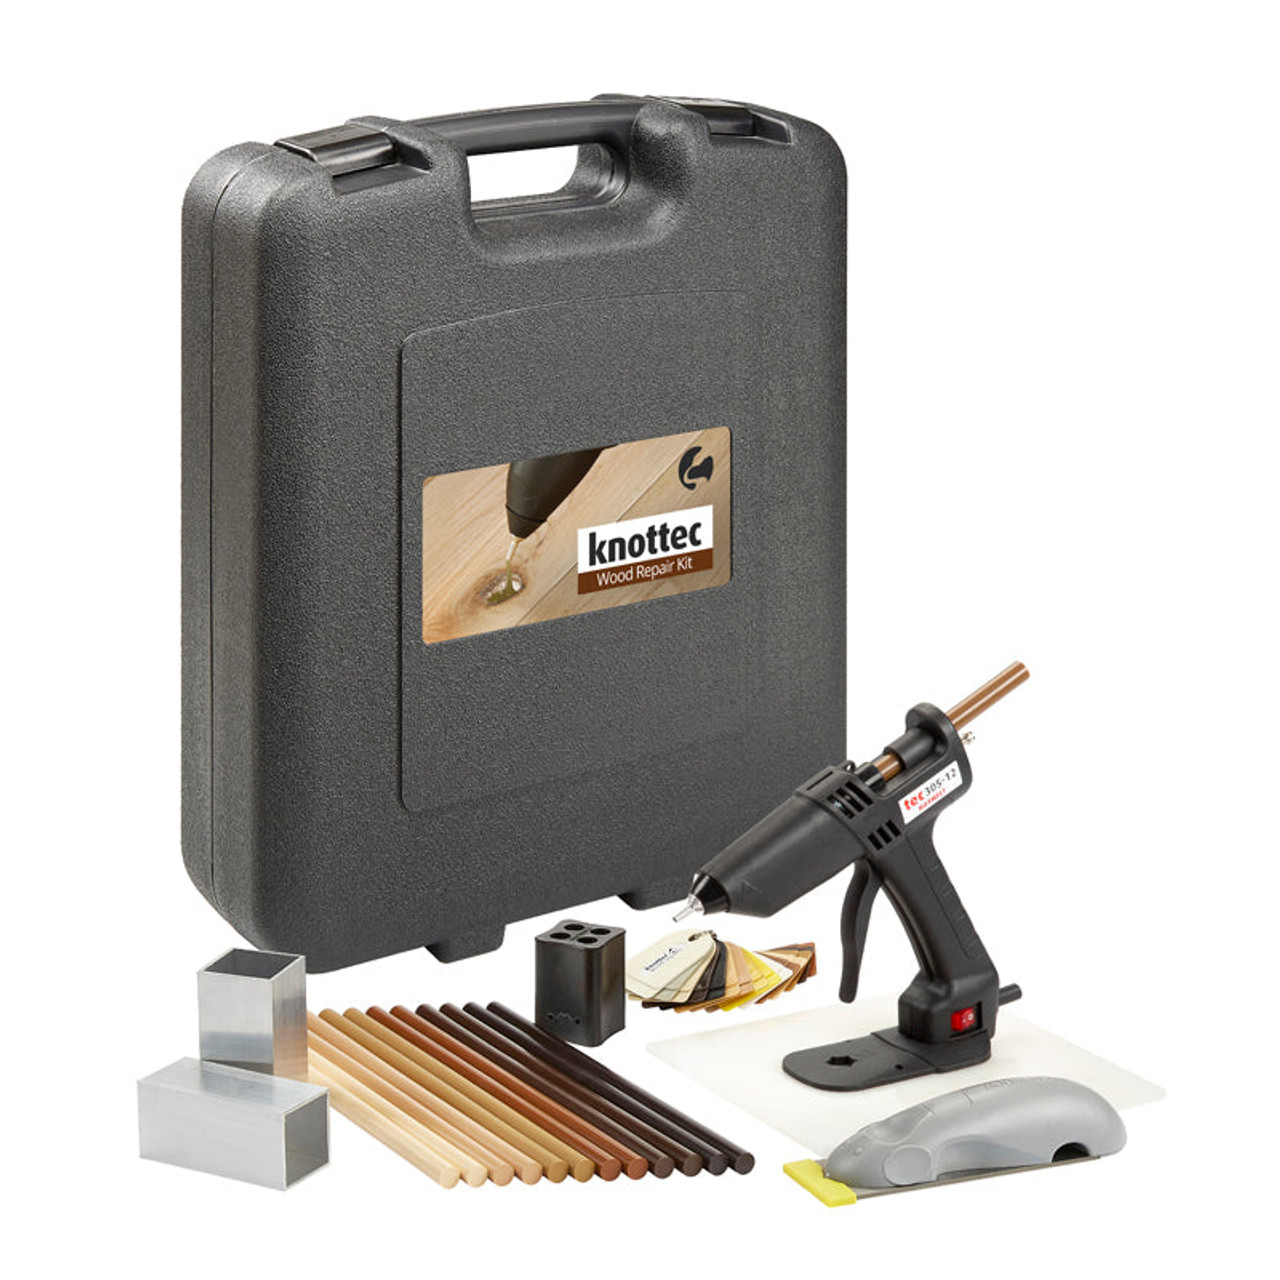 KNOTTEC Applicator | 305-12 Corded Applicator Glue Gun Kit for Light Industrial Wood Repair